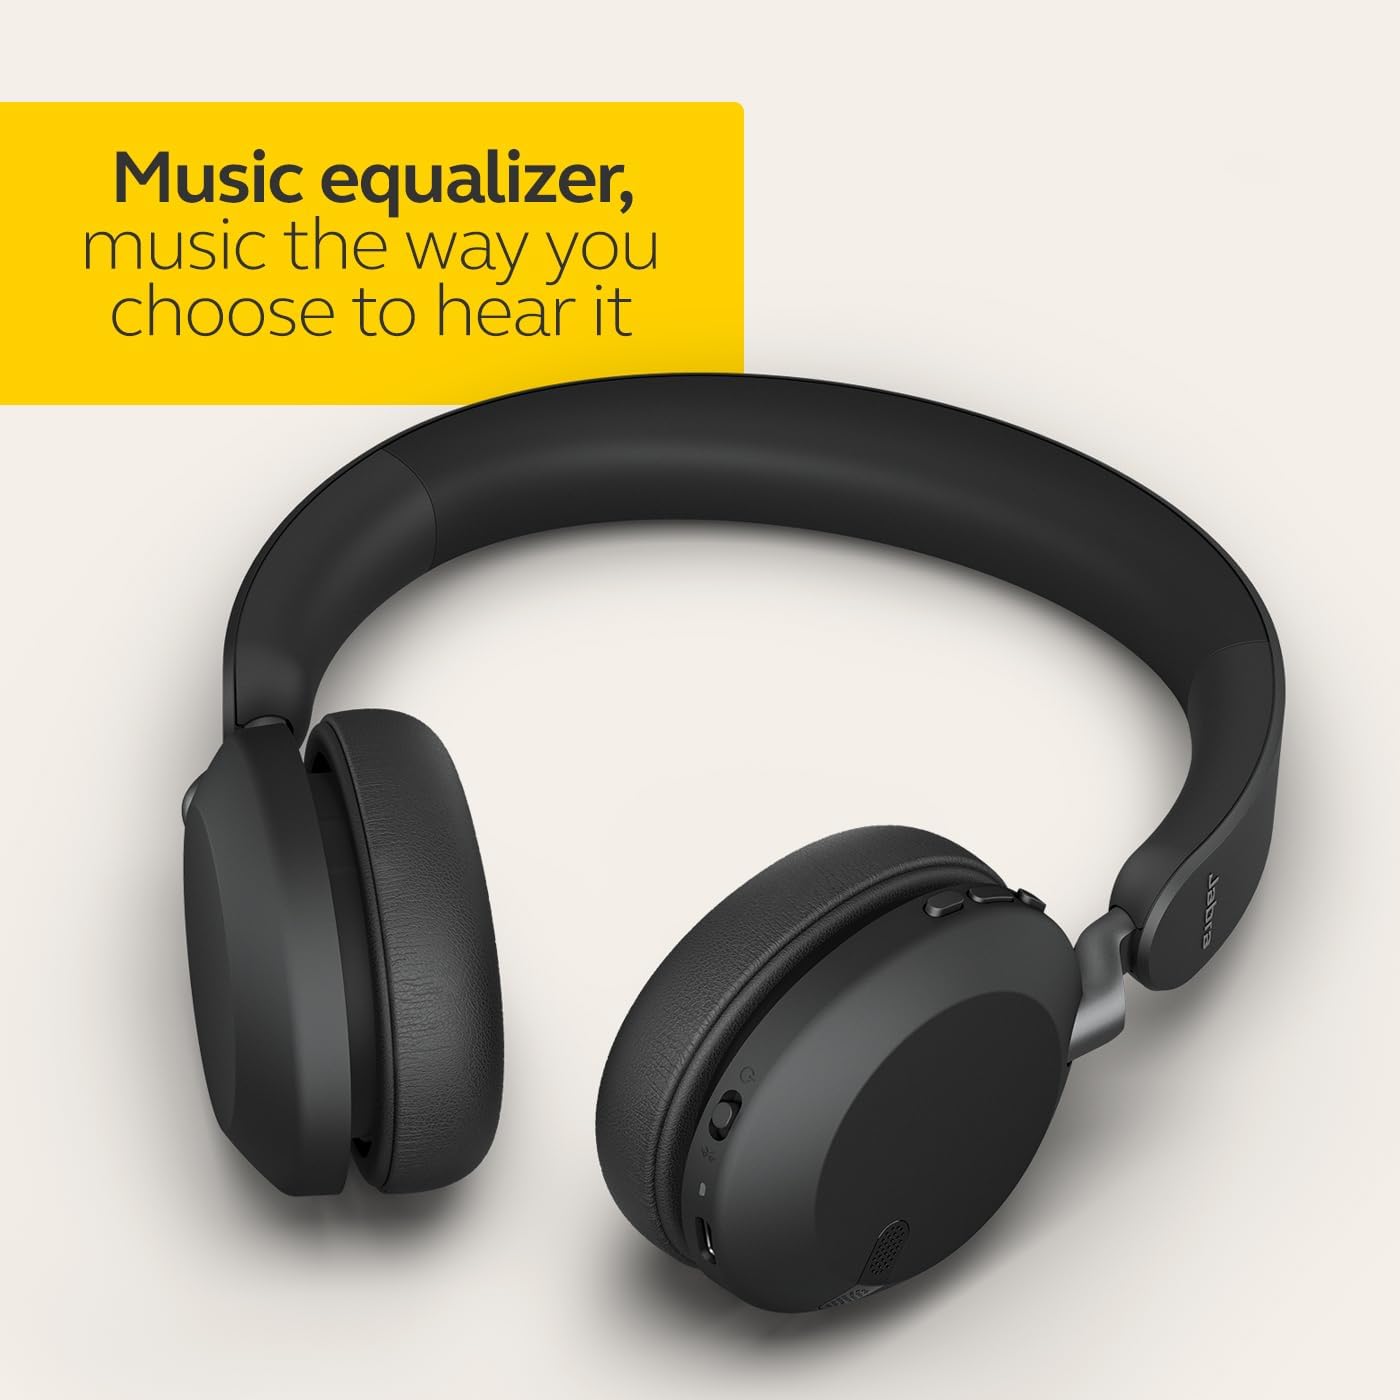 Jabra Elite 45h Wireless On-Ear Headphones - Black - New